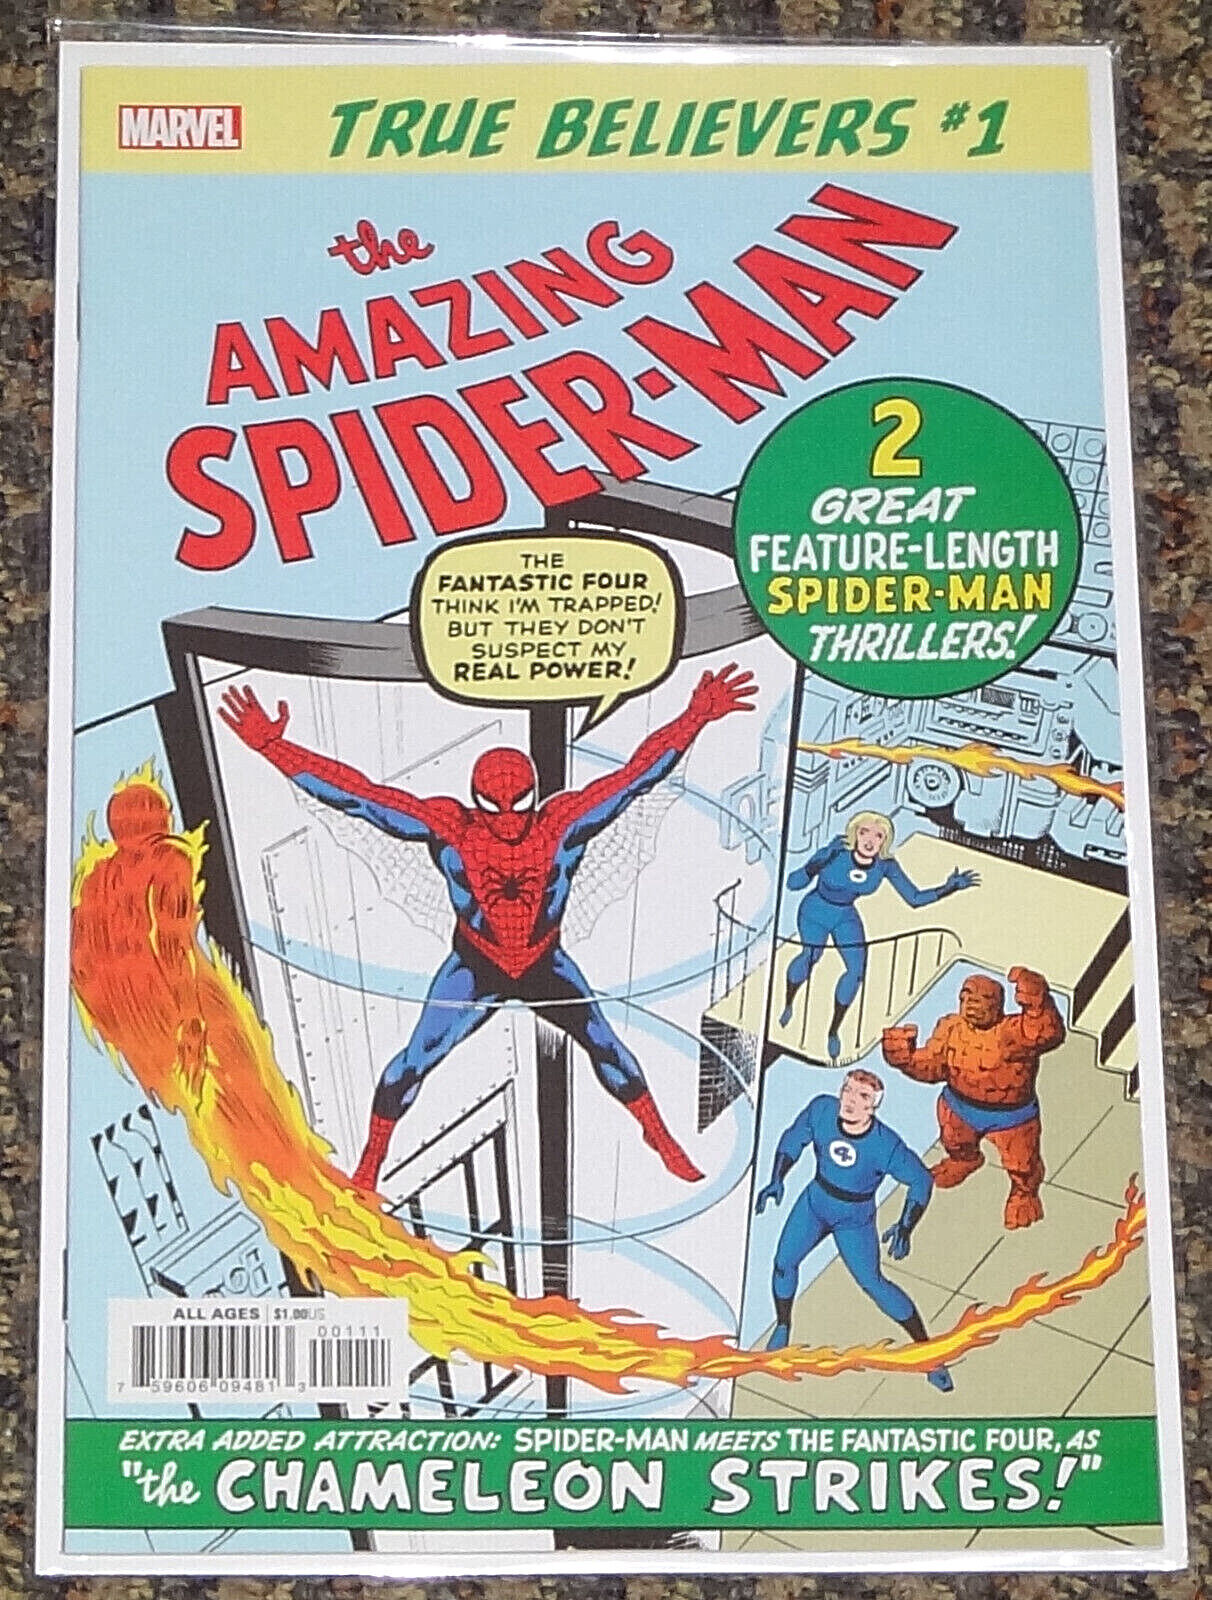 MARVEL COMICS 1963 AMAZING SPIDER-MAN #1 NM 2019 TRUE BELIEVERS REPRINT ISSUE